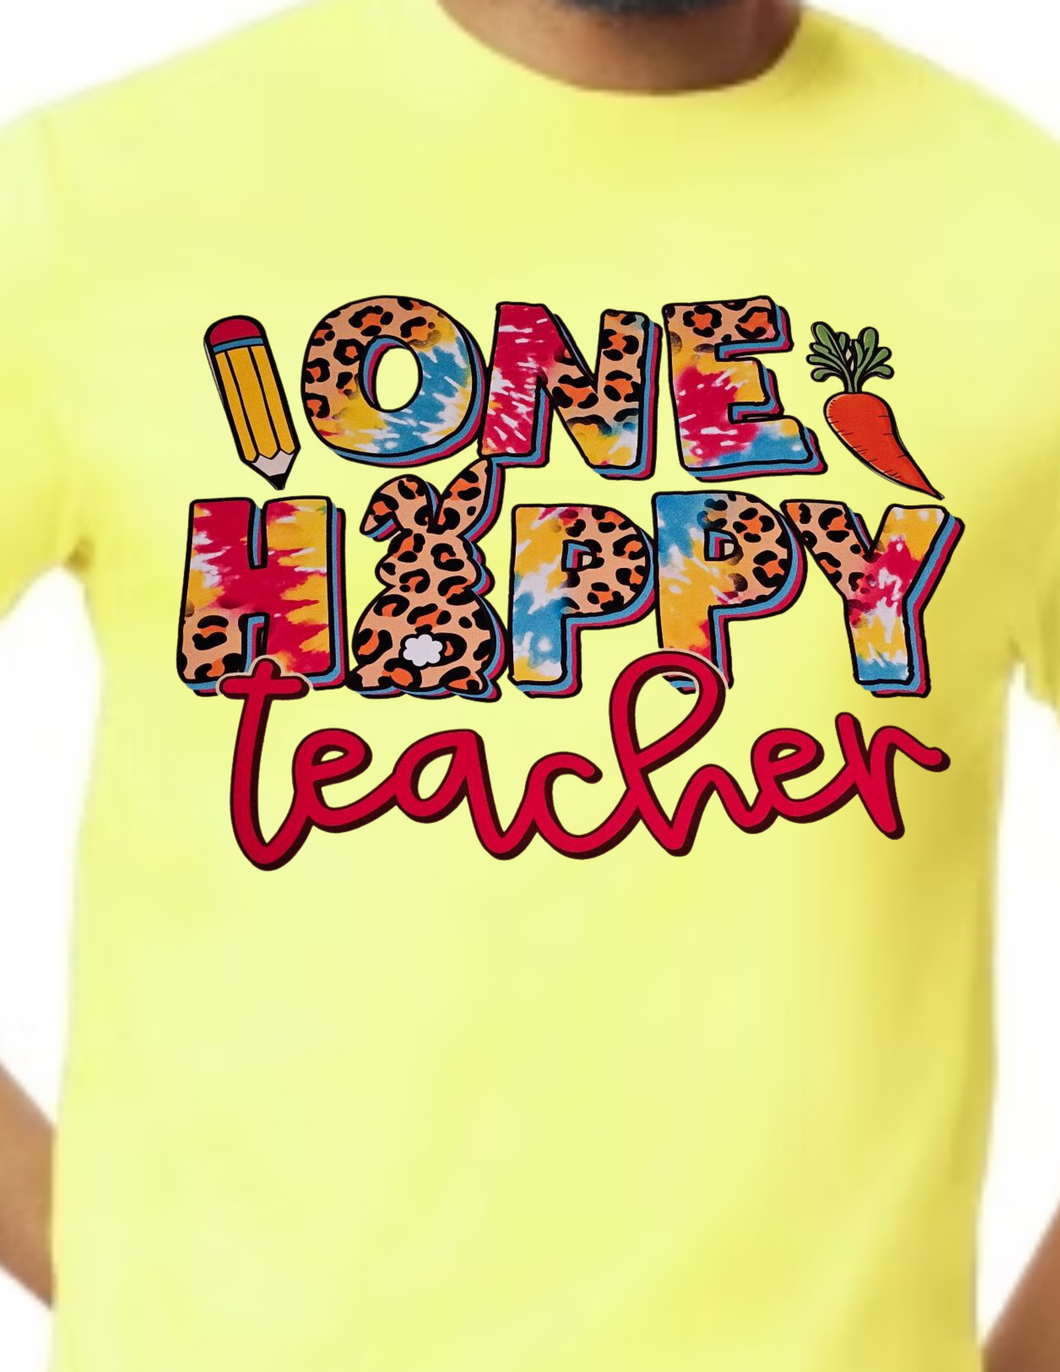 One Hoppy Teacher